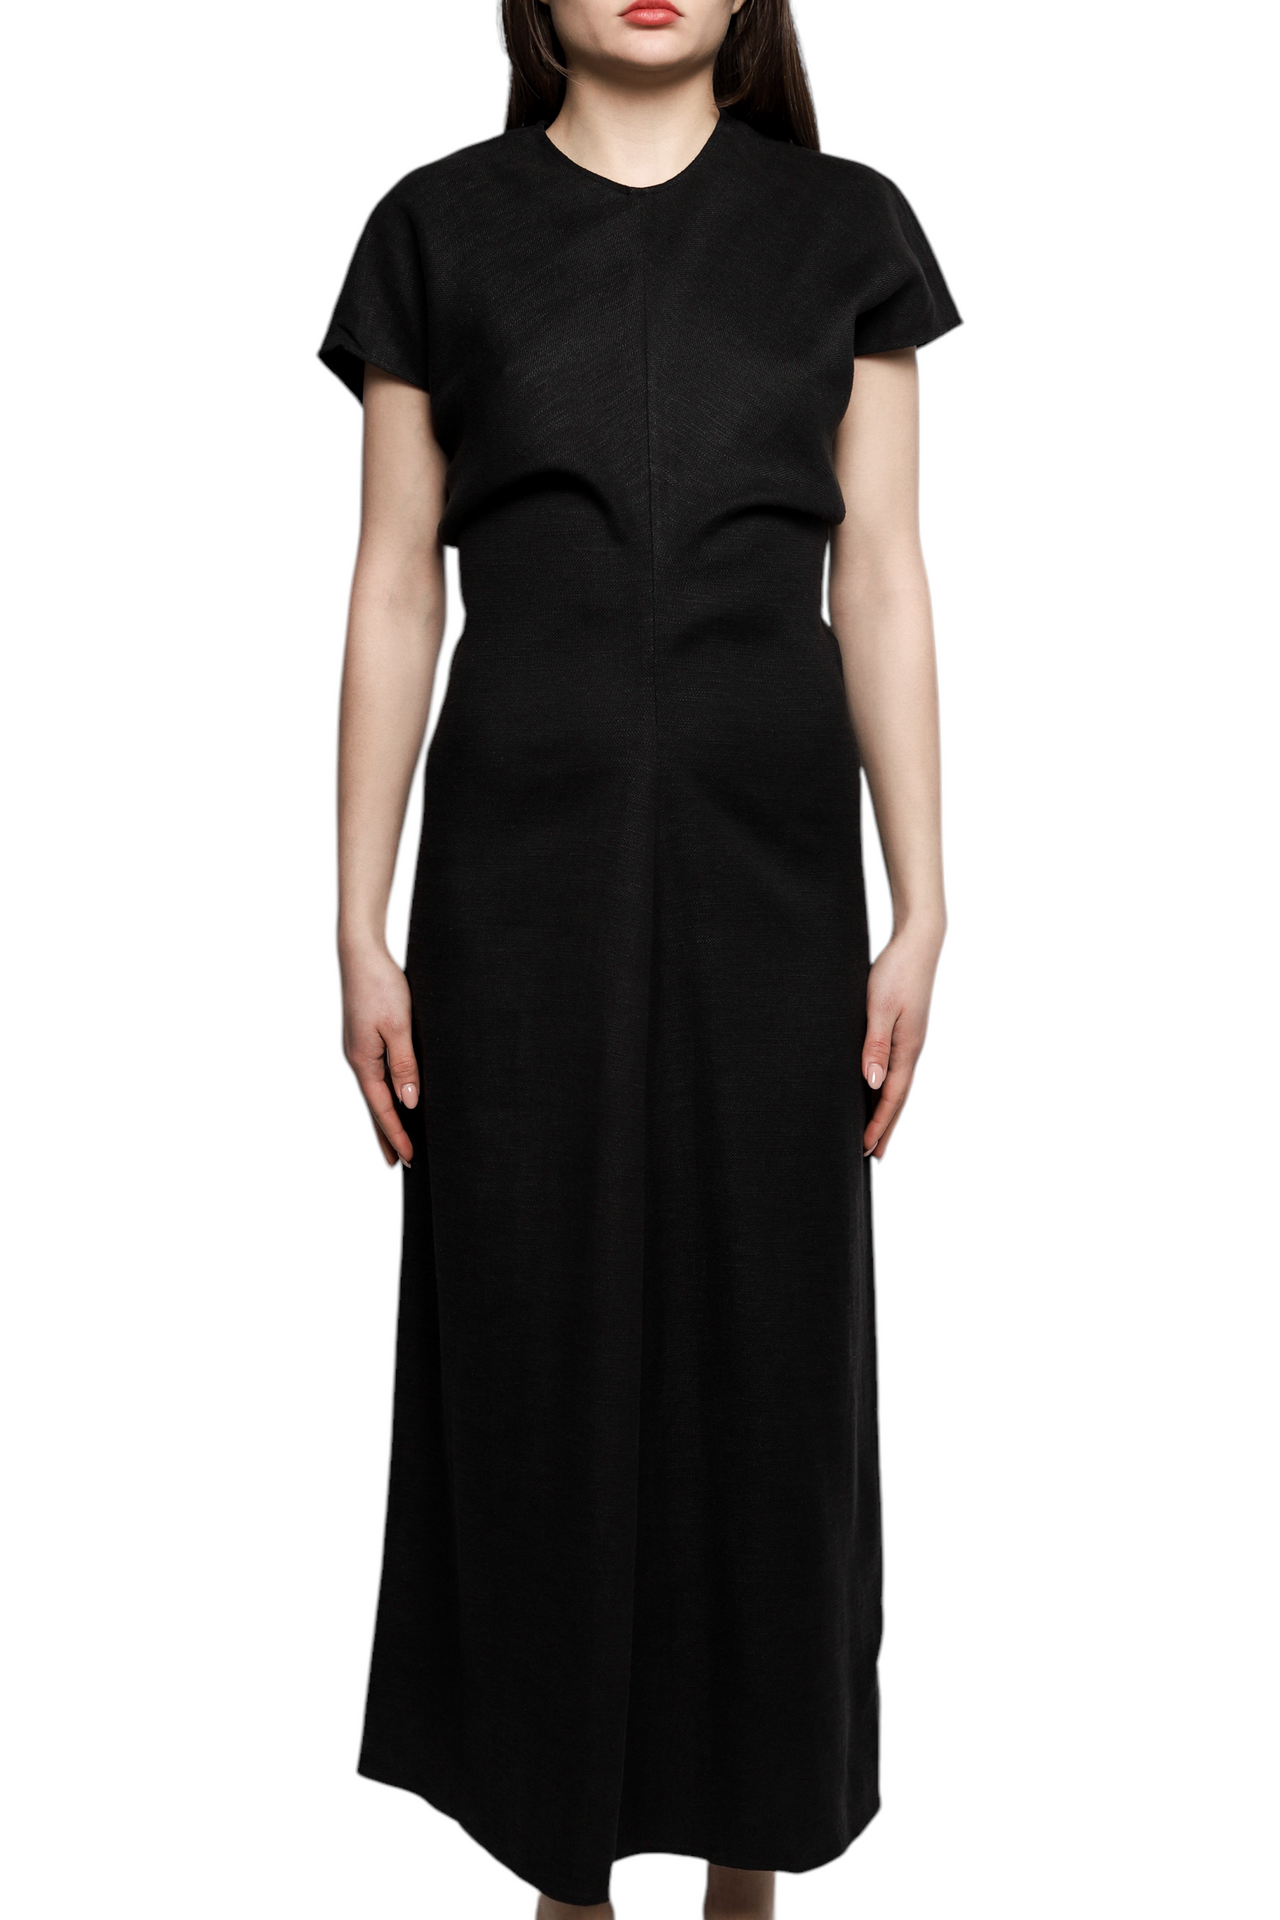 Toteme Slouch Waist Dress Black